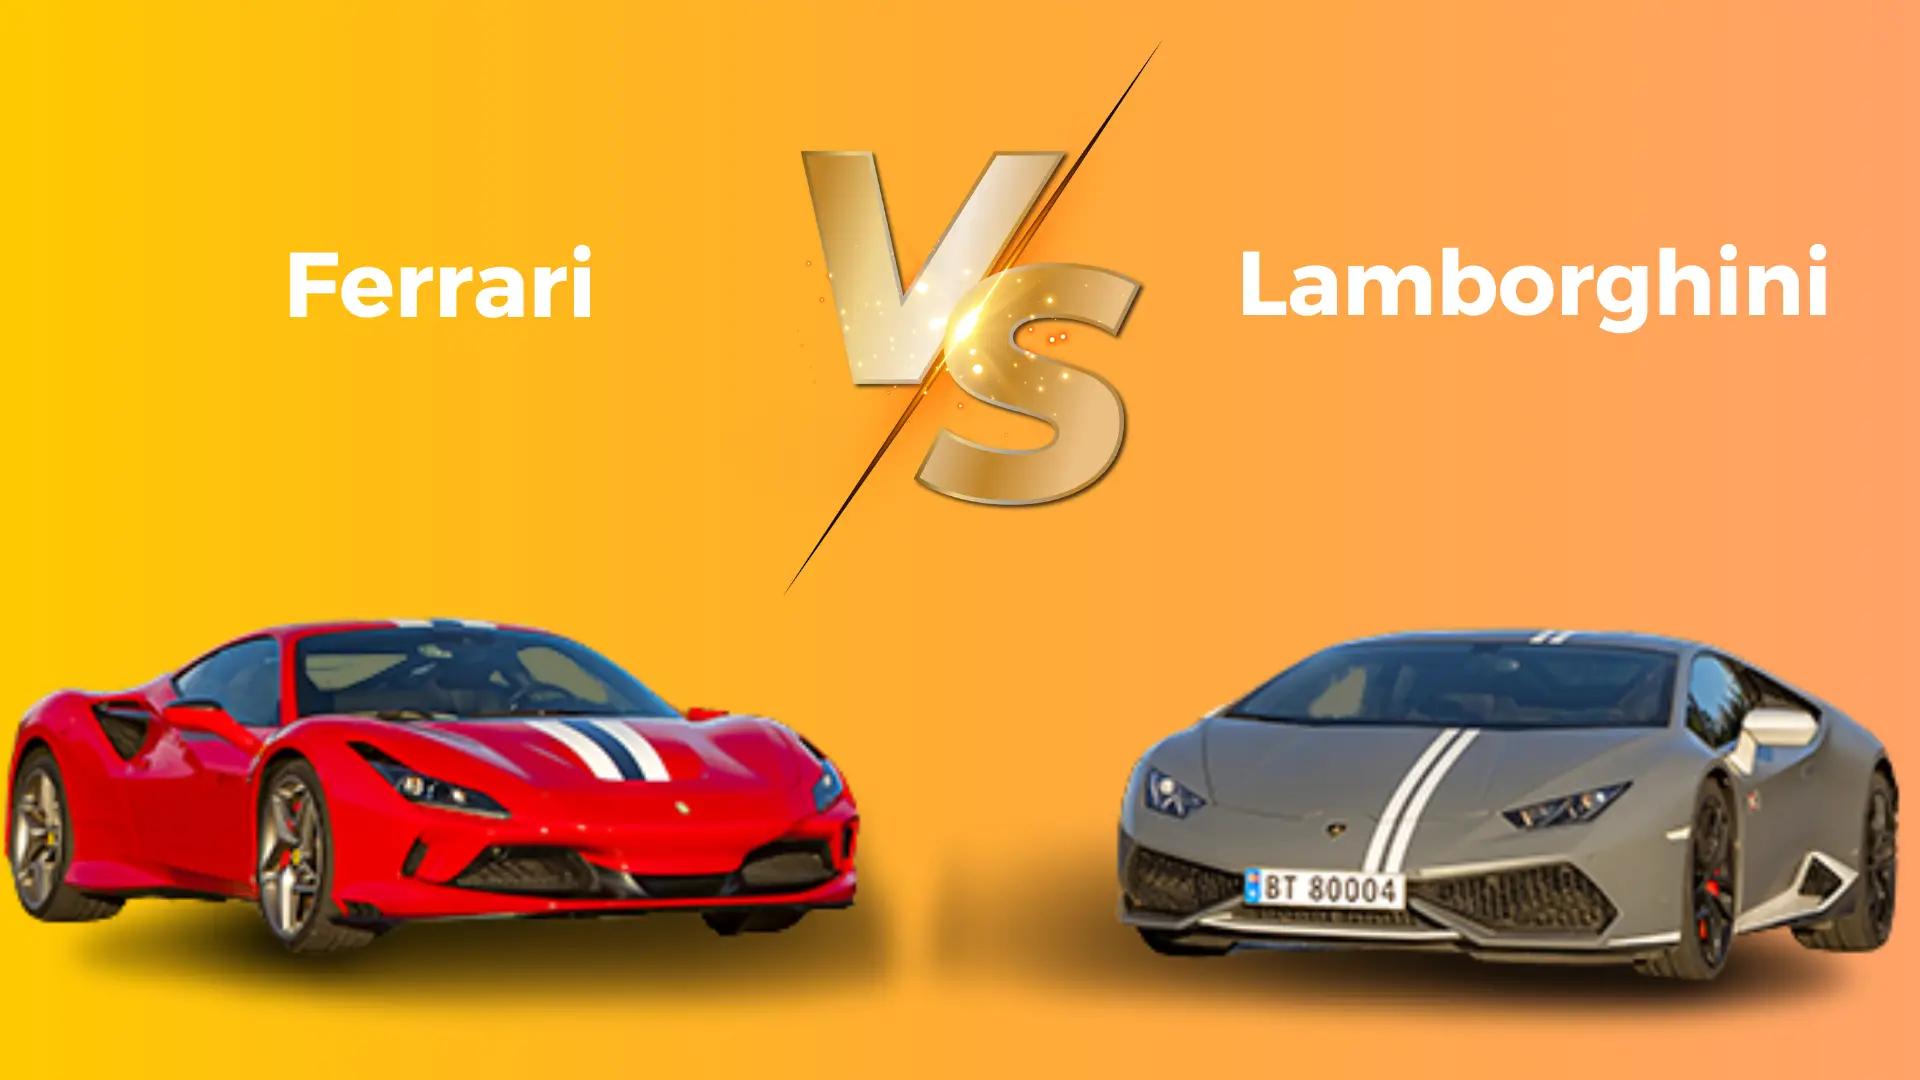 ferrari vs lamborghini price - Is A Ferrari more expensive than a Porsche